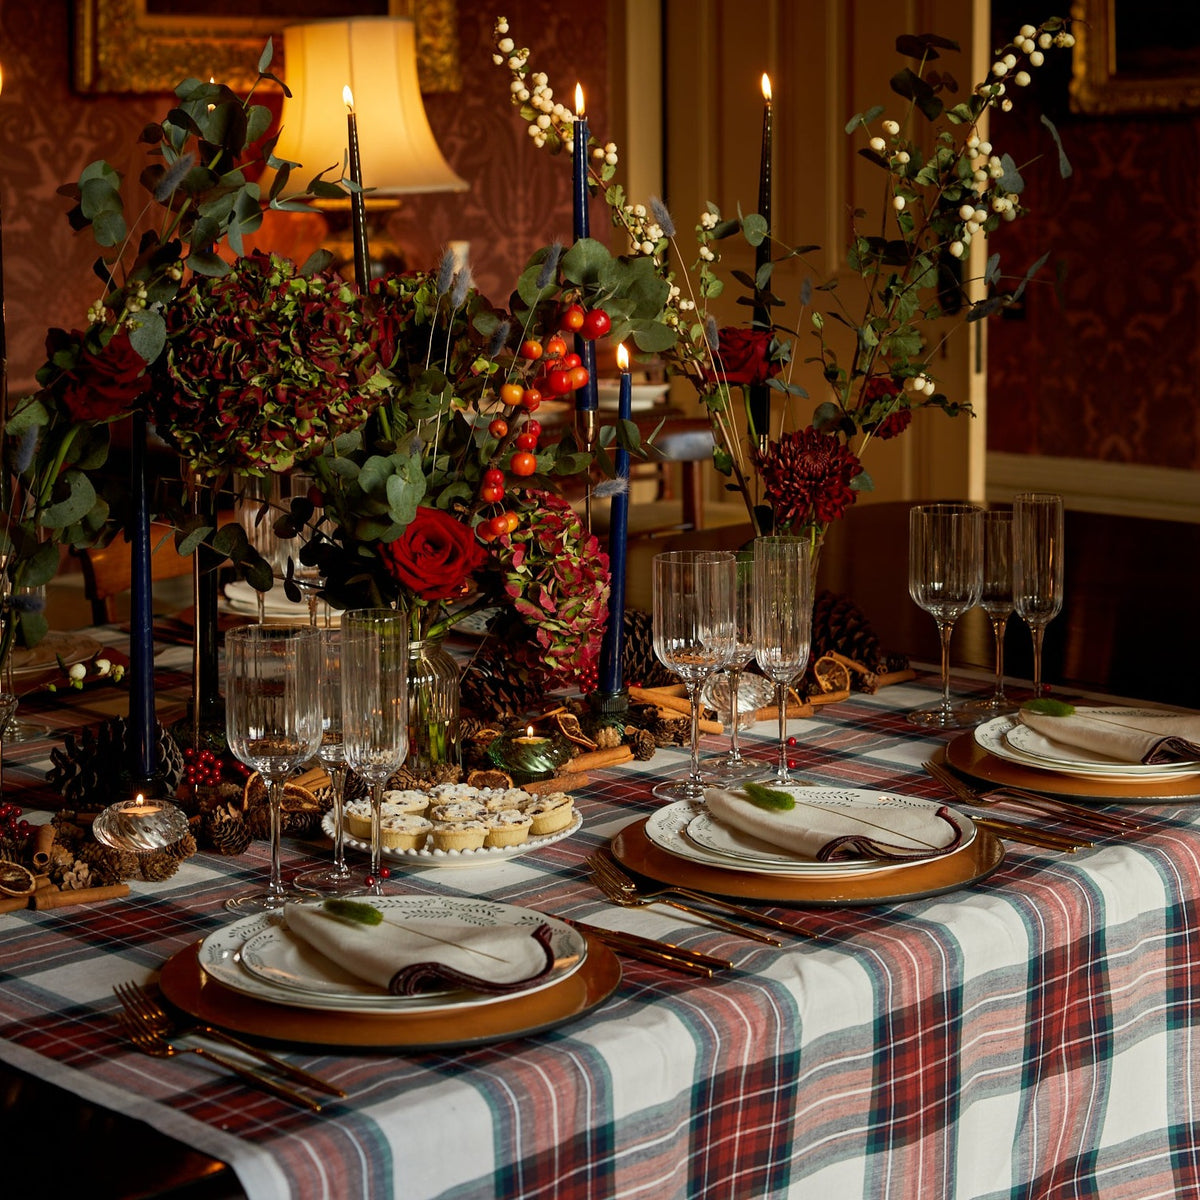 Elegant Event Essentials - Chemin de table tartan rouge 30,5 x 274